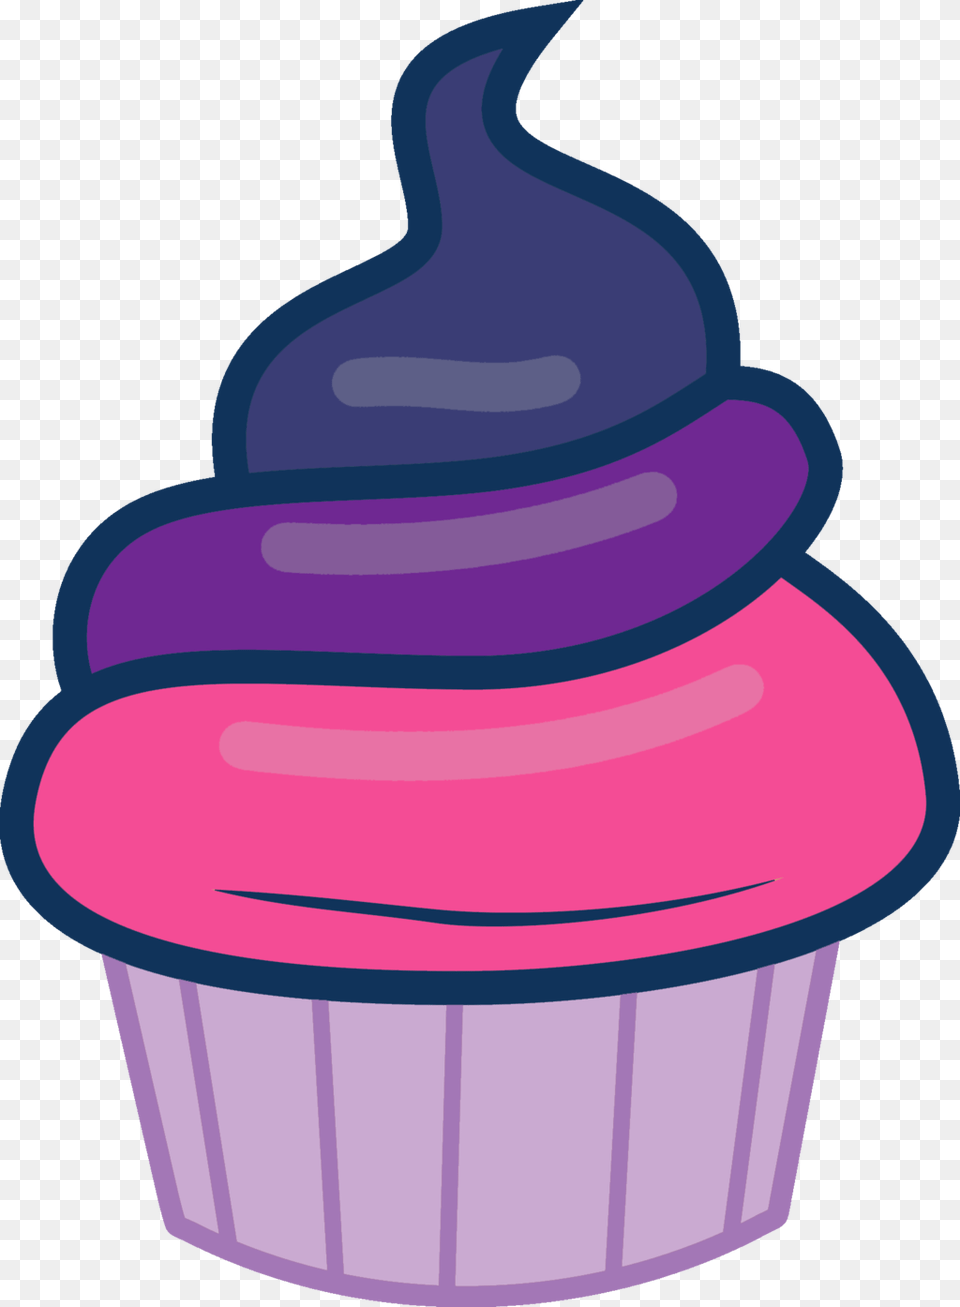 Twilight Sparkle Cupcake By Magicdog93 Cupcake Pinkie Pie Cupcake, Cake, Cream, Dessert, Food Free Transparent Png